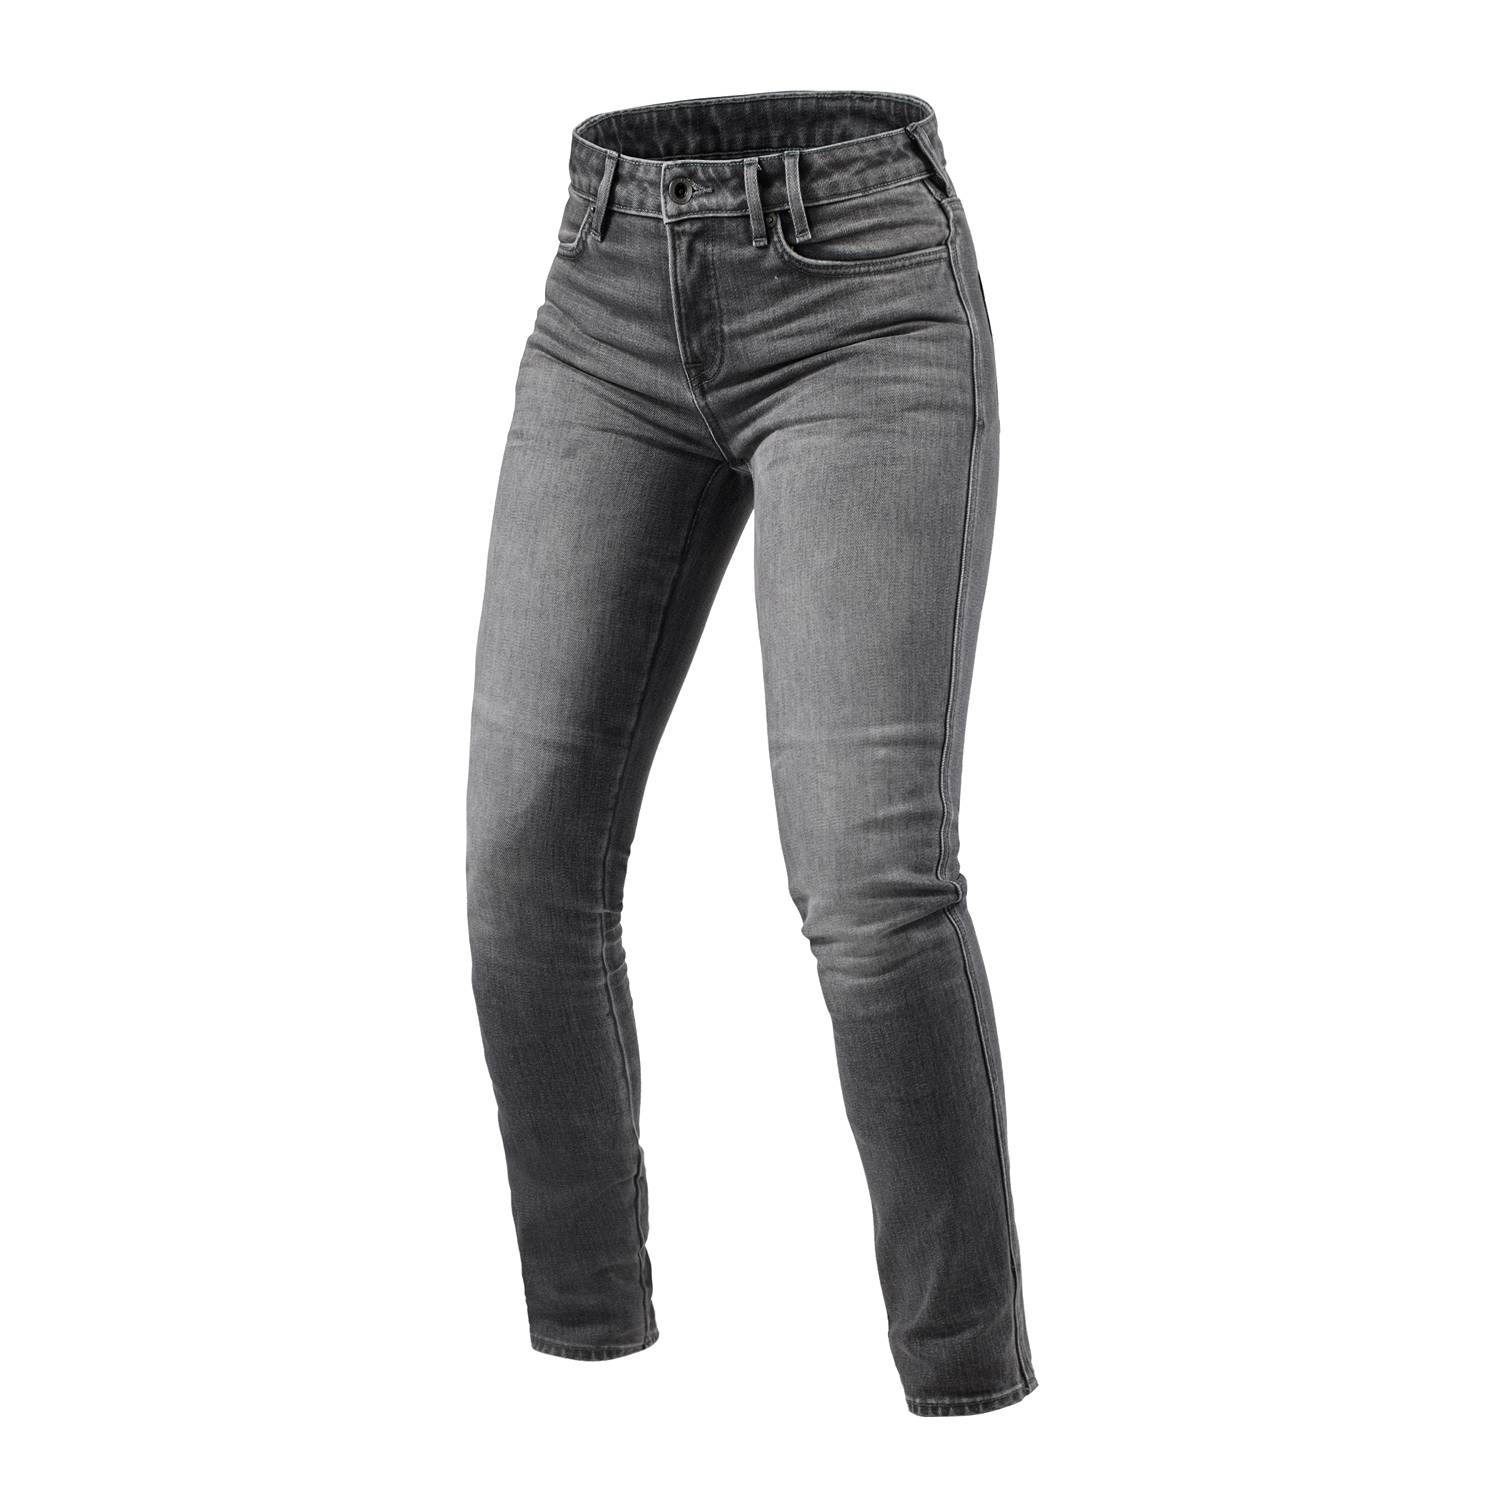 Image of REV'IT! Jeans Shelby 2 Ladies SK Medium Grey Stone L30 Size L30/W32 ID 8700001376754